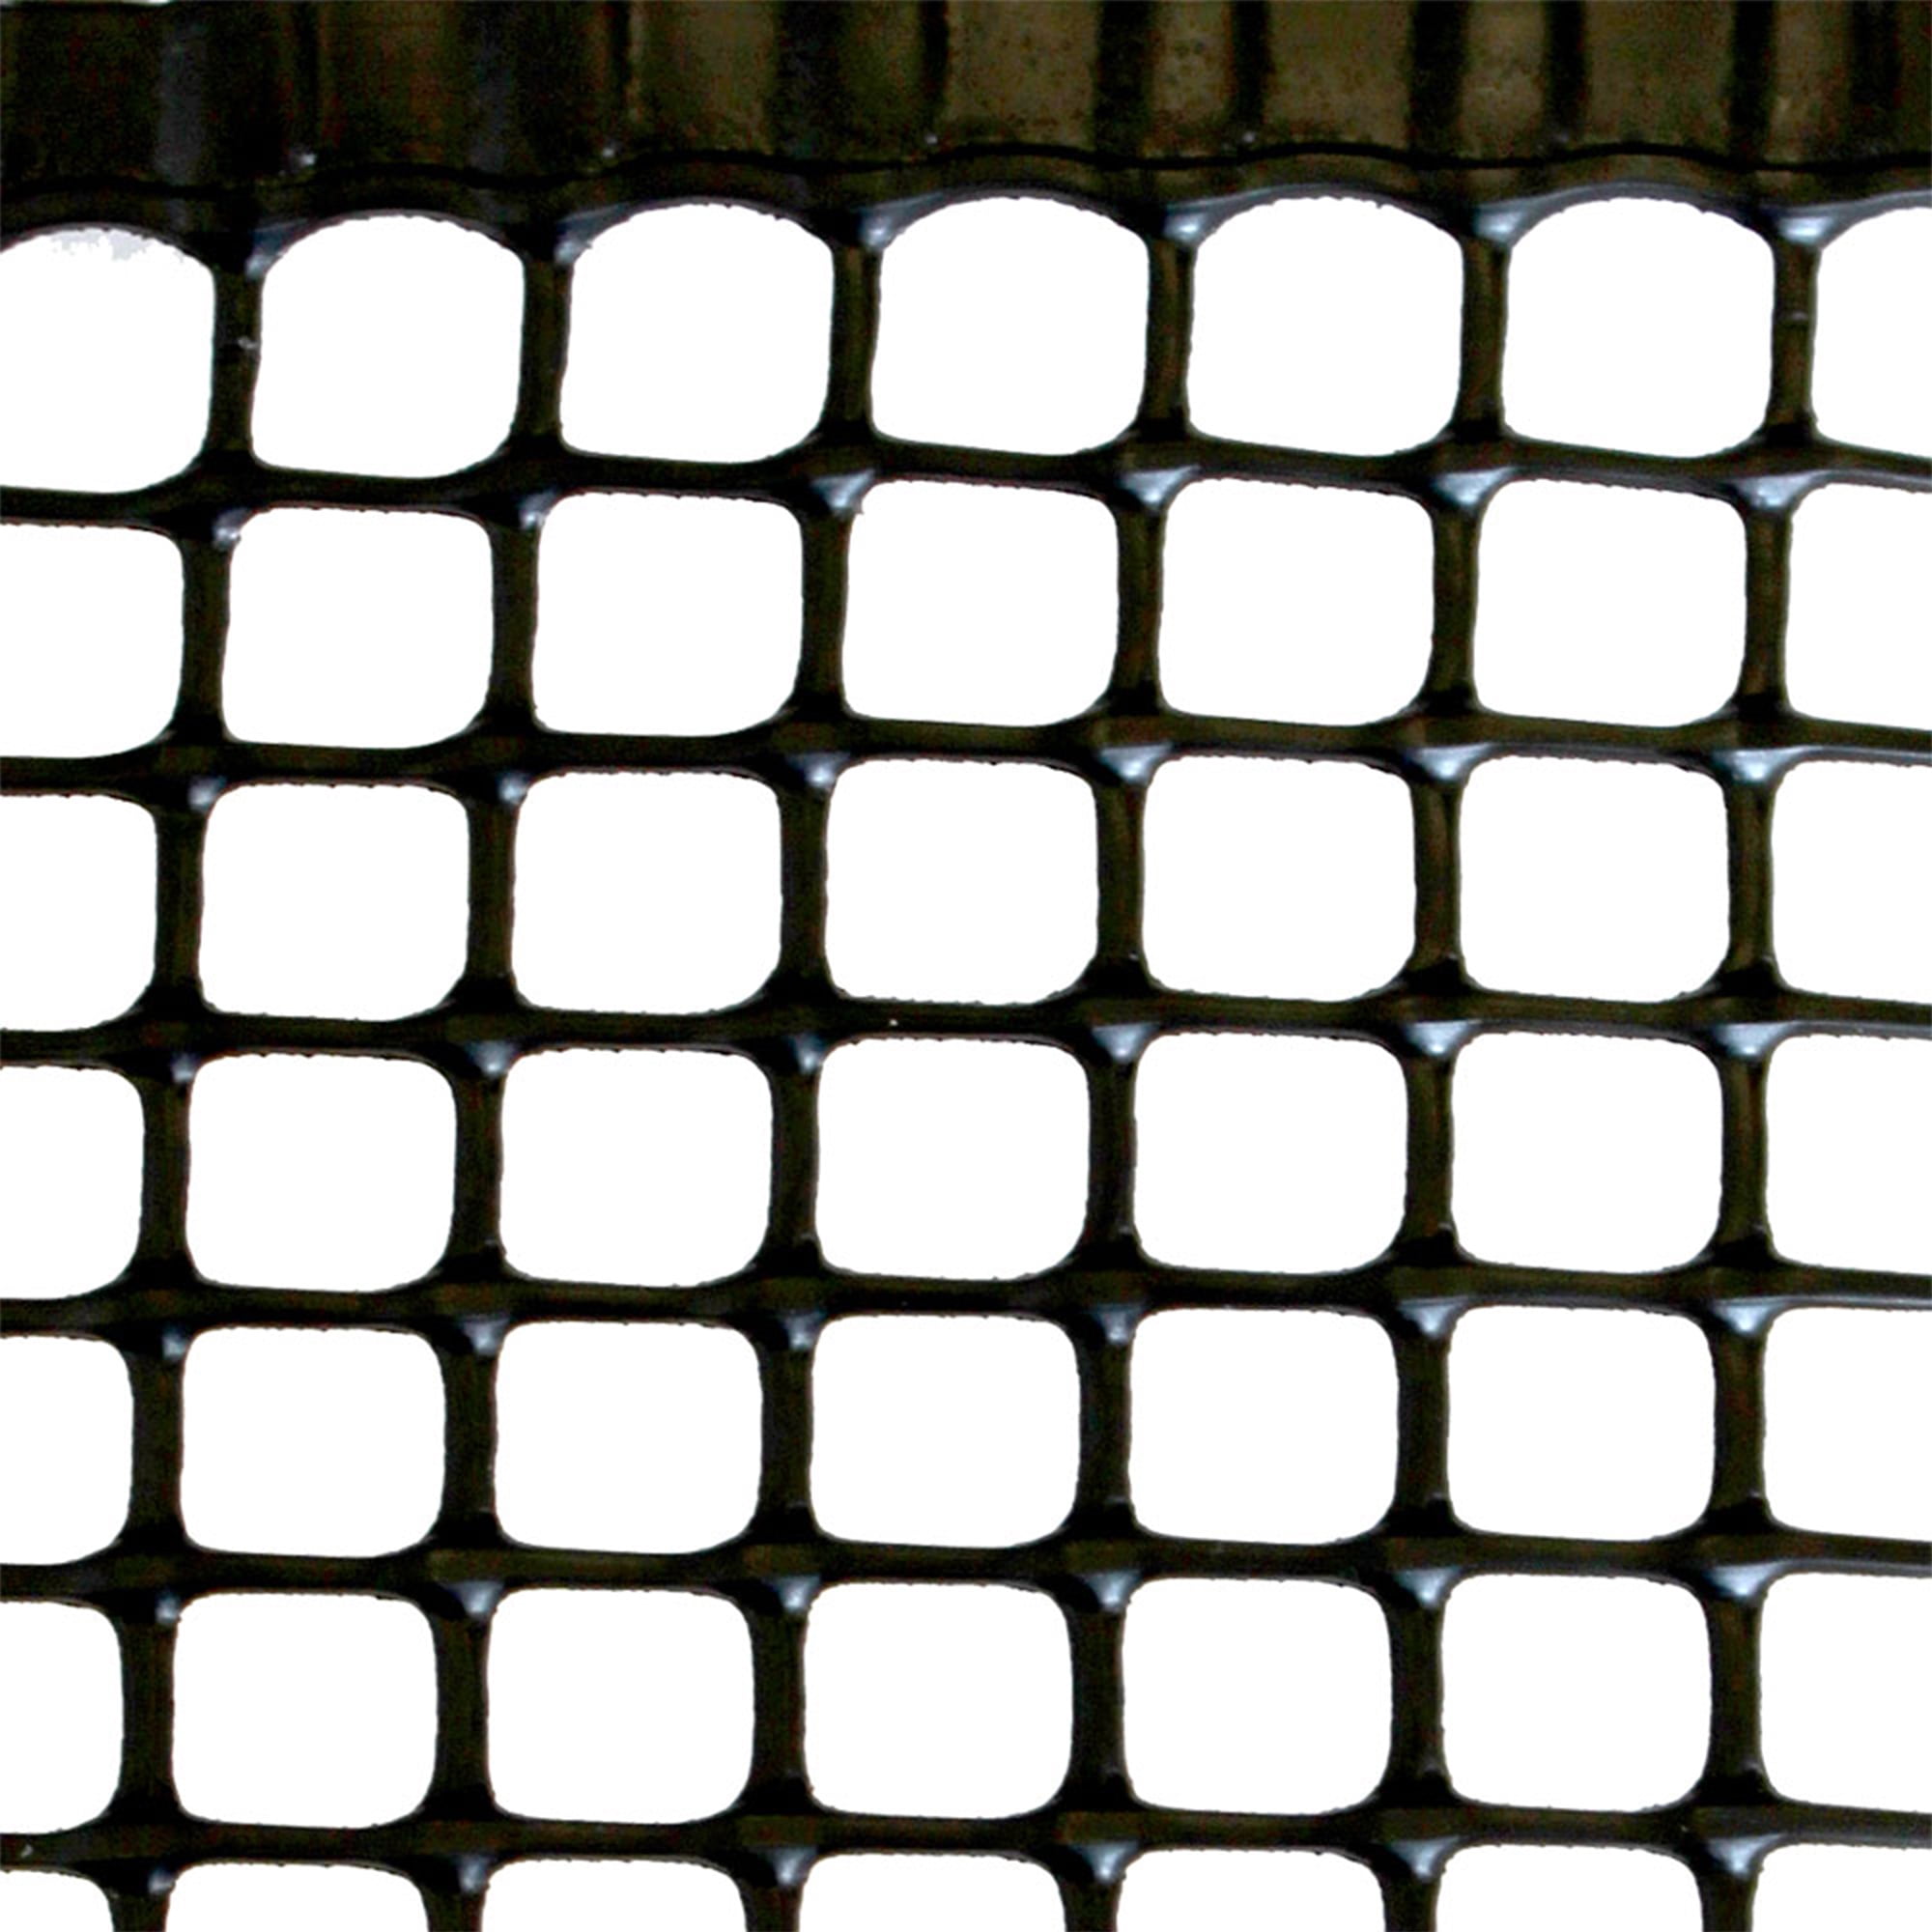 Black Plastic Hardware Net 3 ft. x 15 ft. & Mesh 0.5 x 0.5  - FencerWire